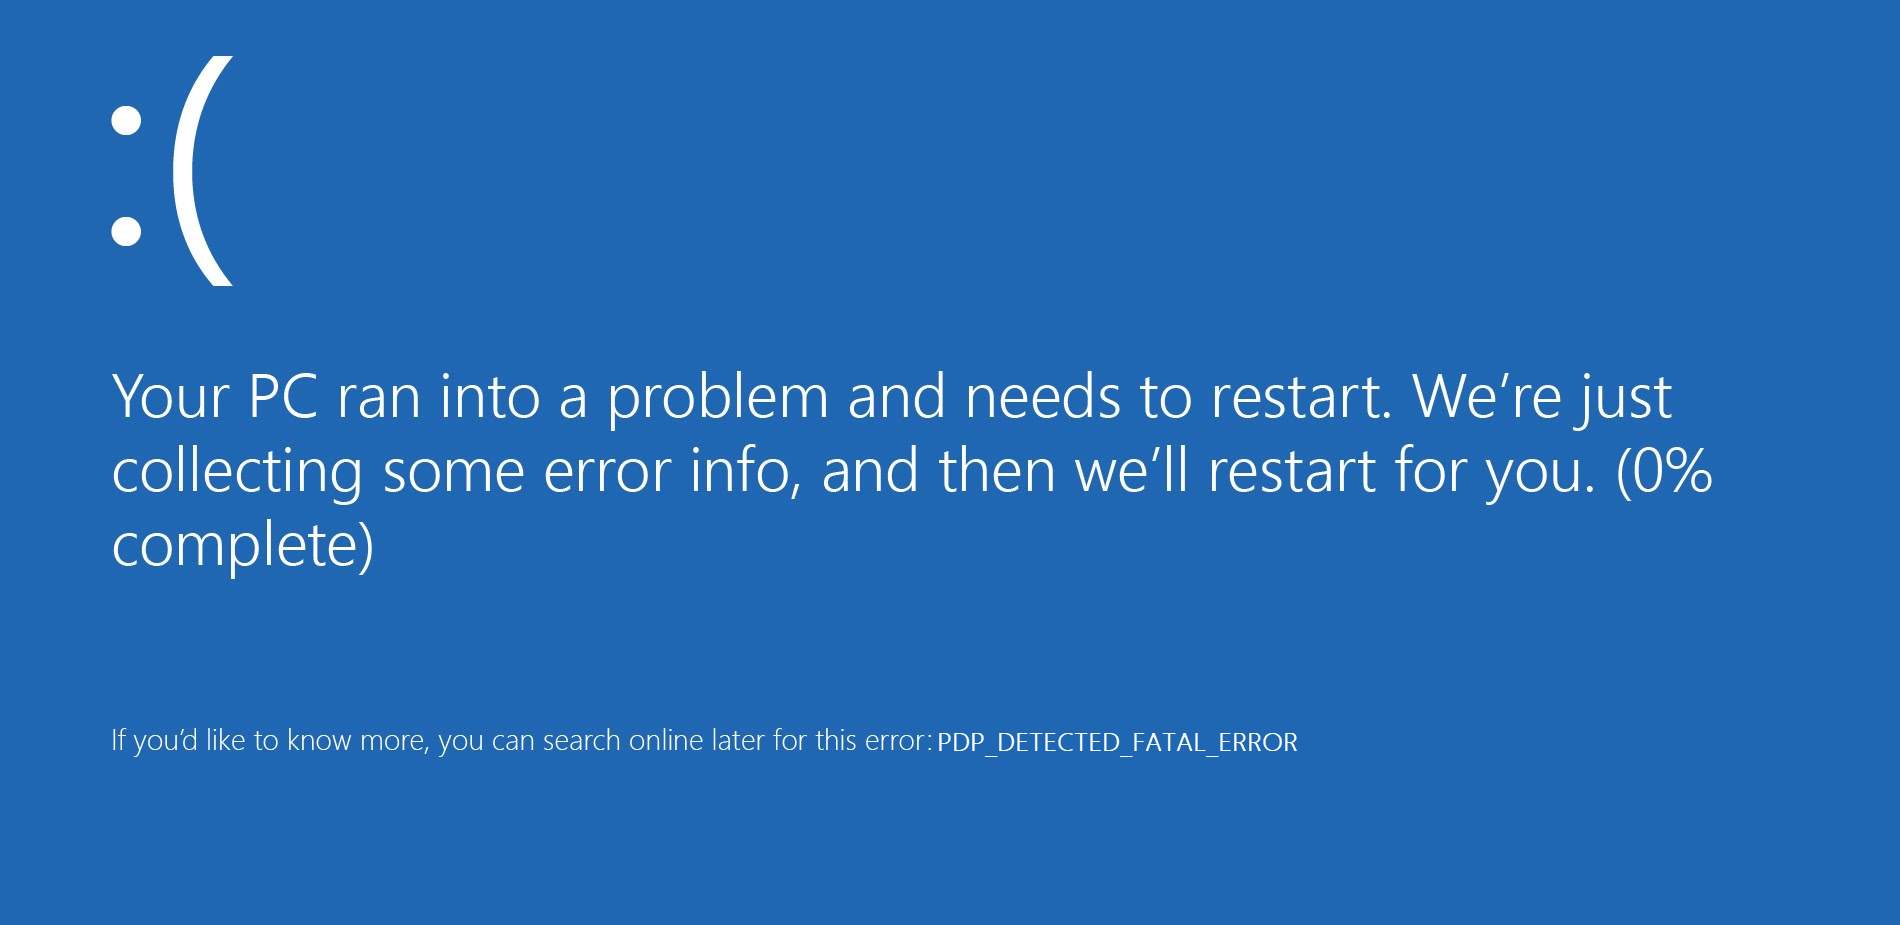 [Fixed] PNP_Detected_Fatal_Error error on Windows 10